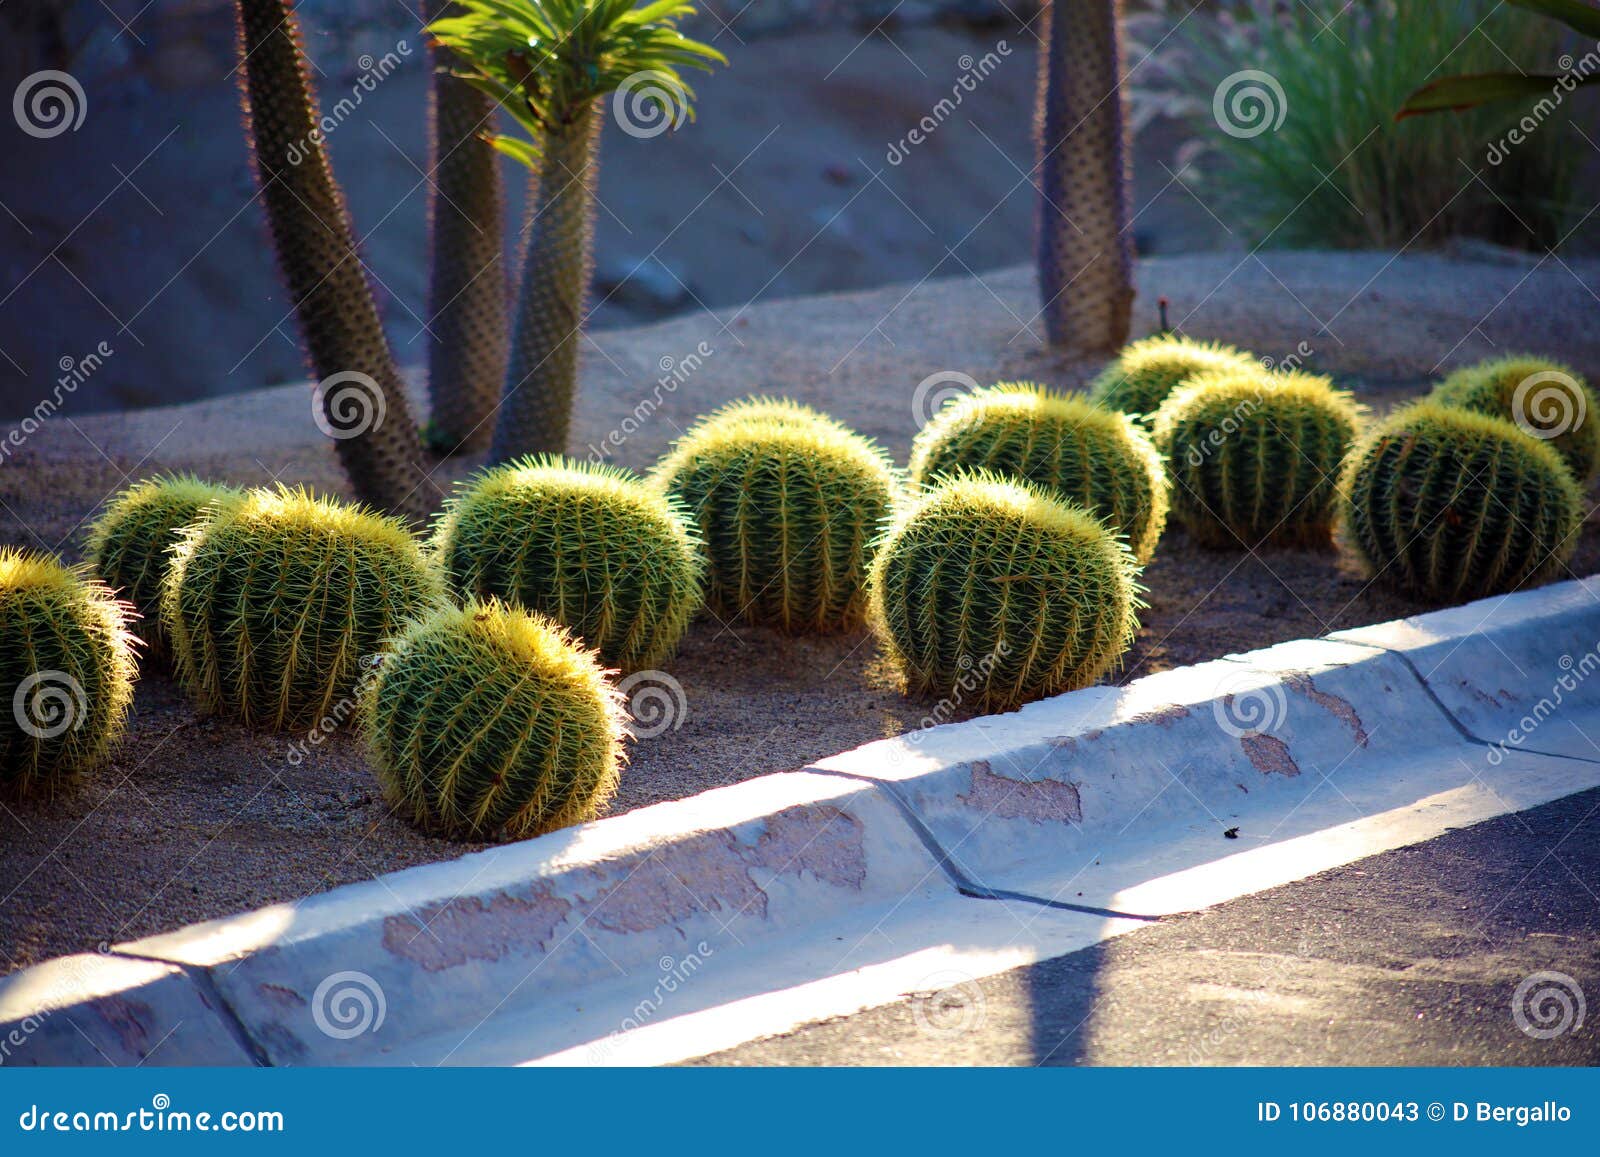 cactus in mexico los cabos plant 50 megapixels picture